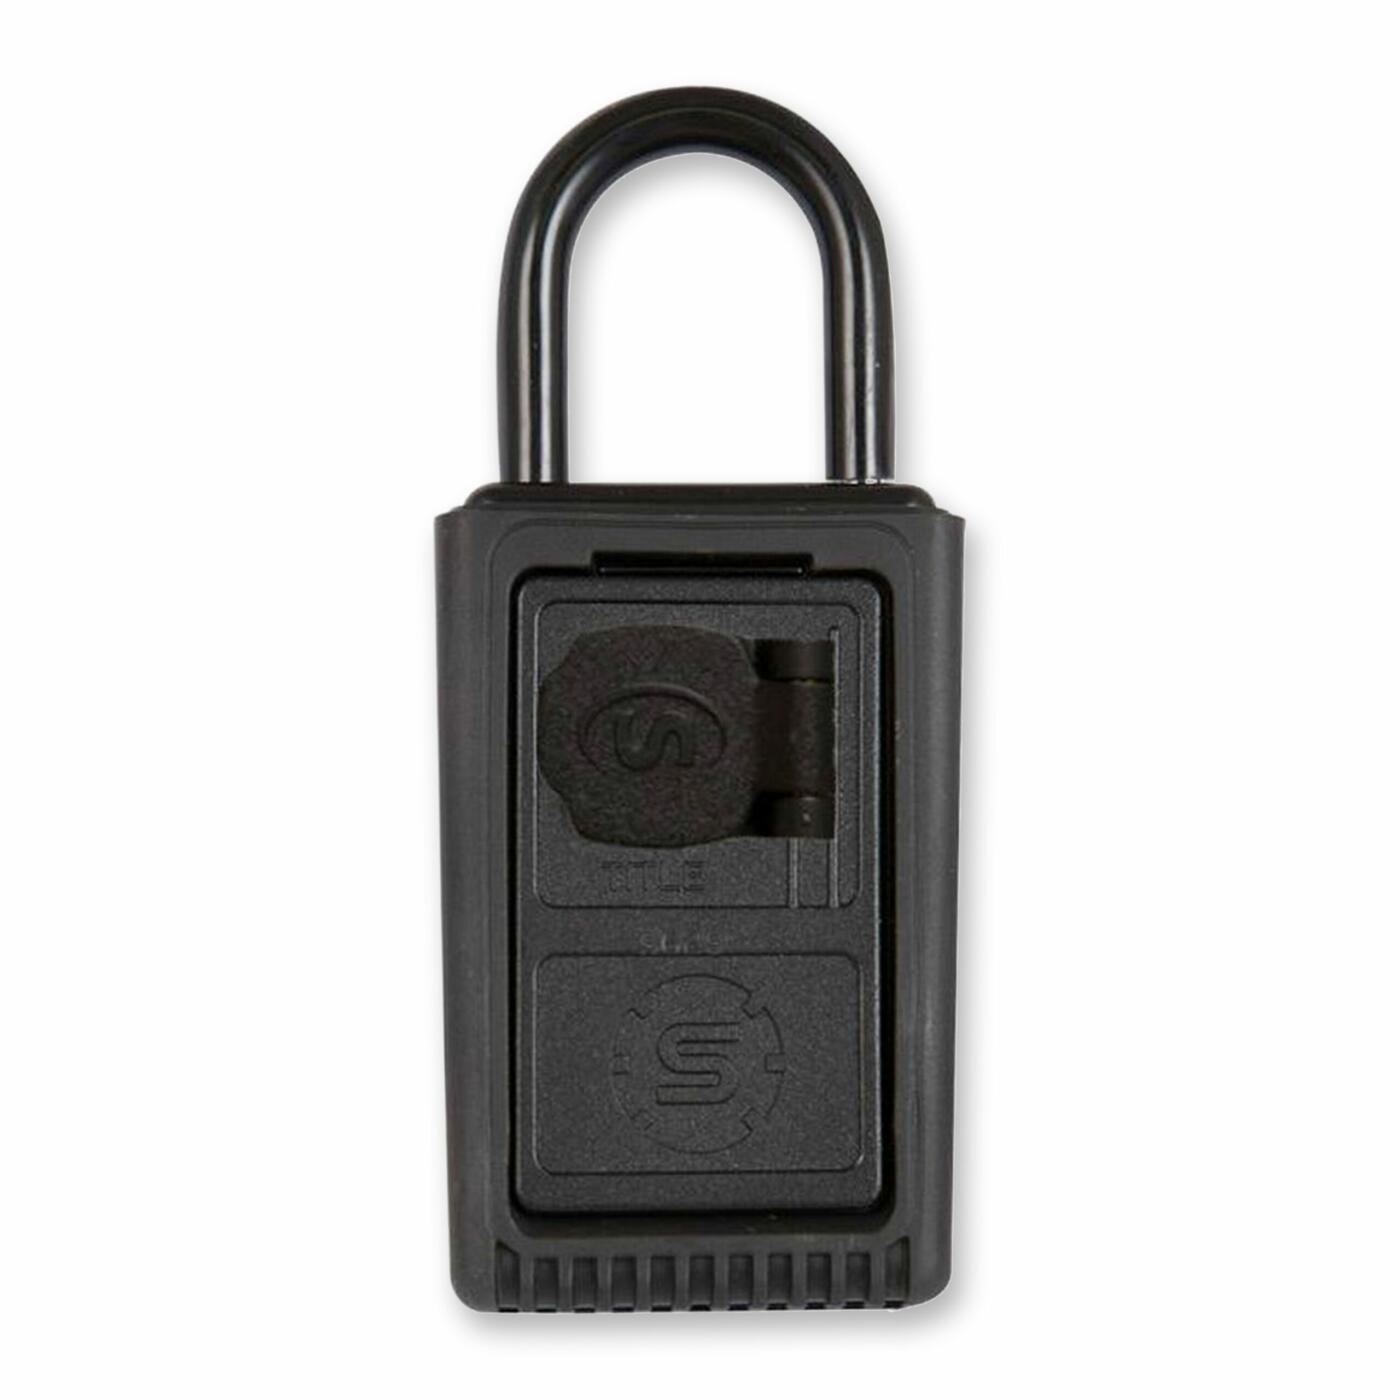 Supra-C3 Key Lock Box